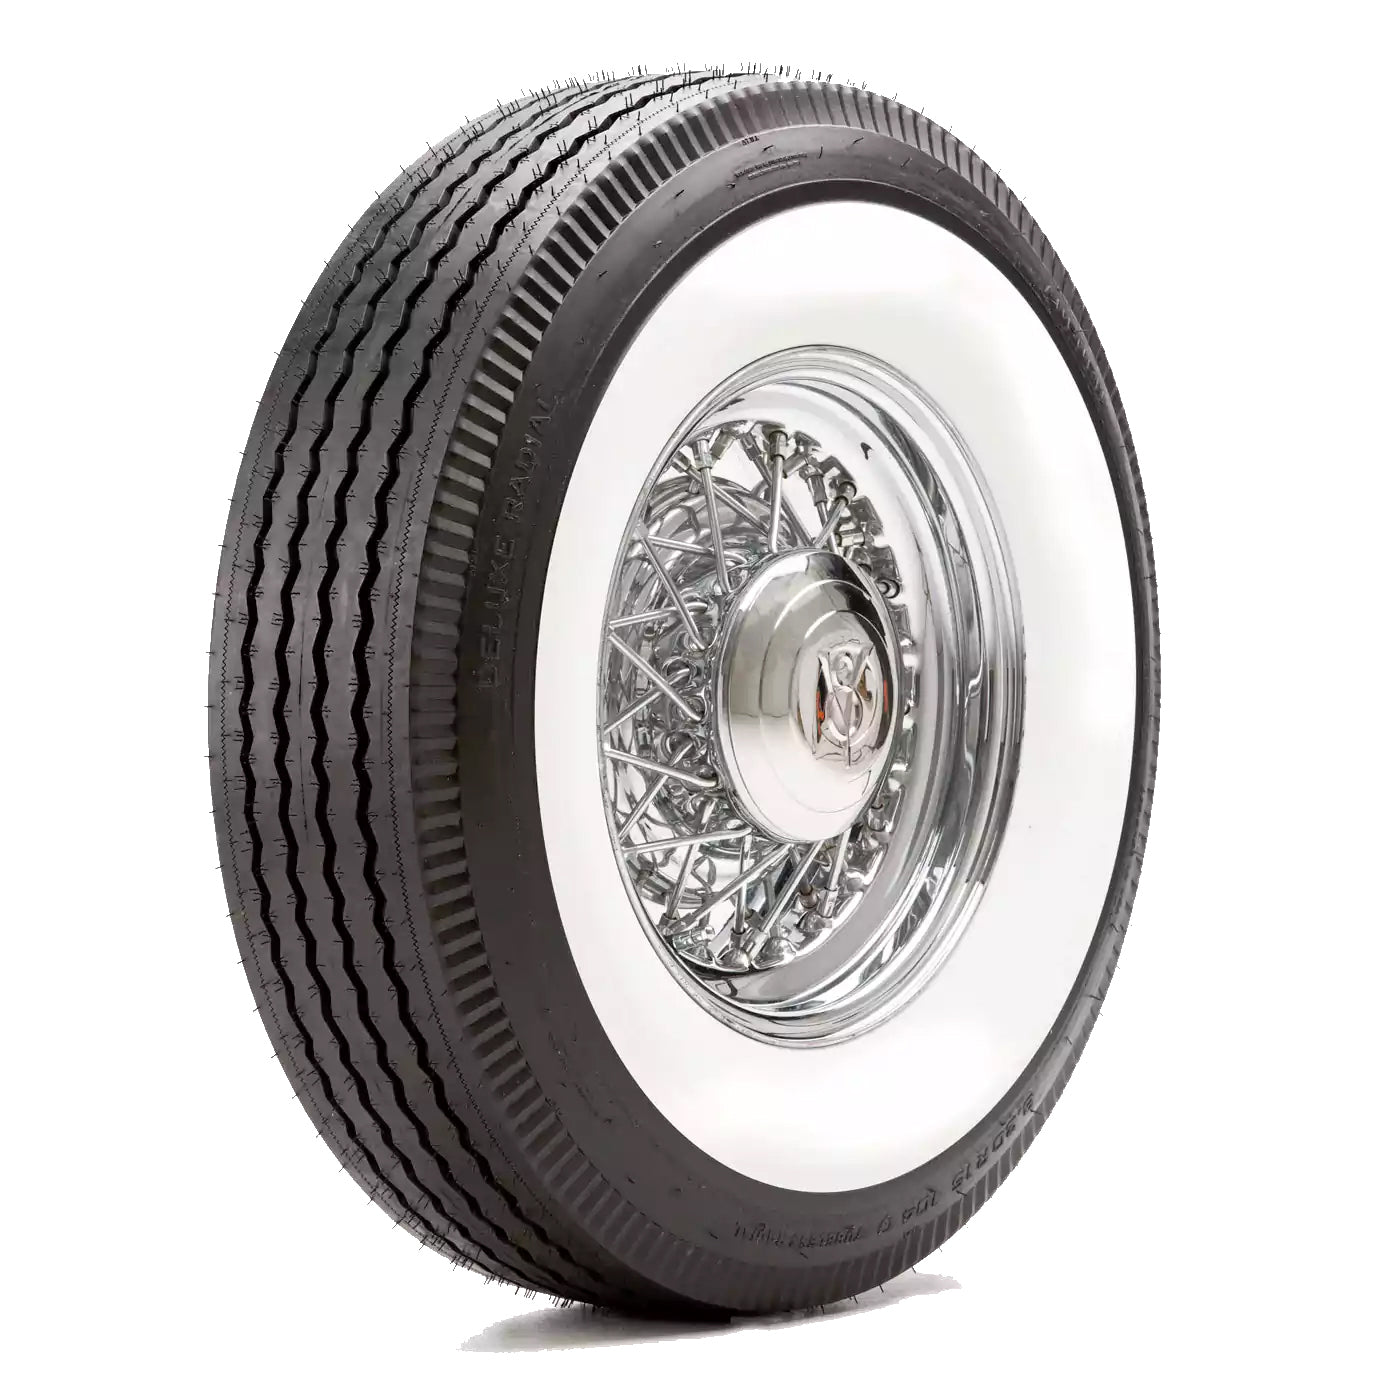 Auburn Radial 2 1/4" Whitewall Tyre - 550R16